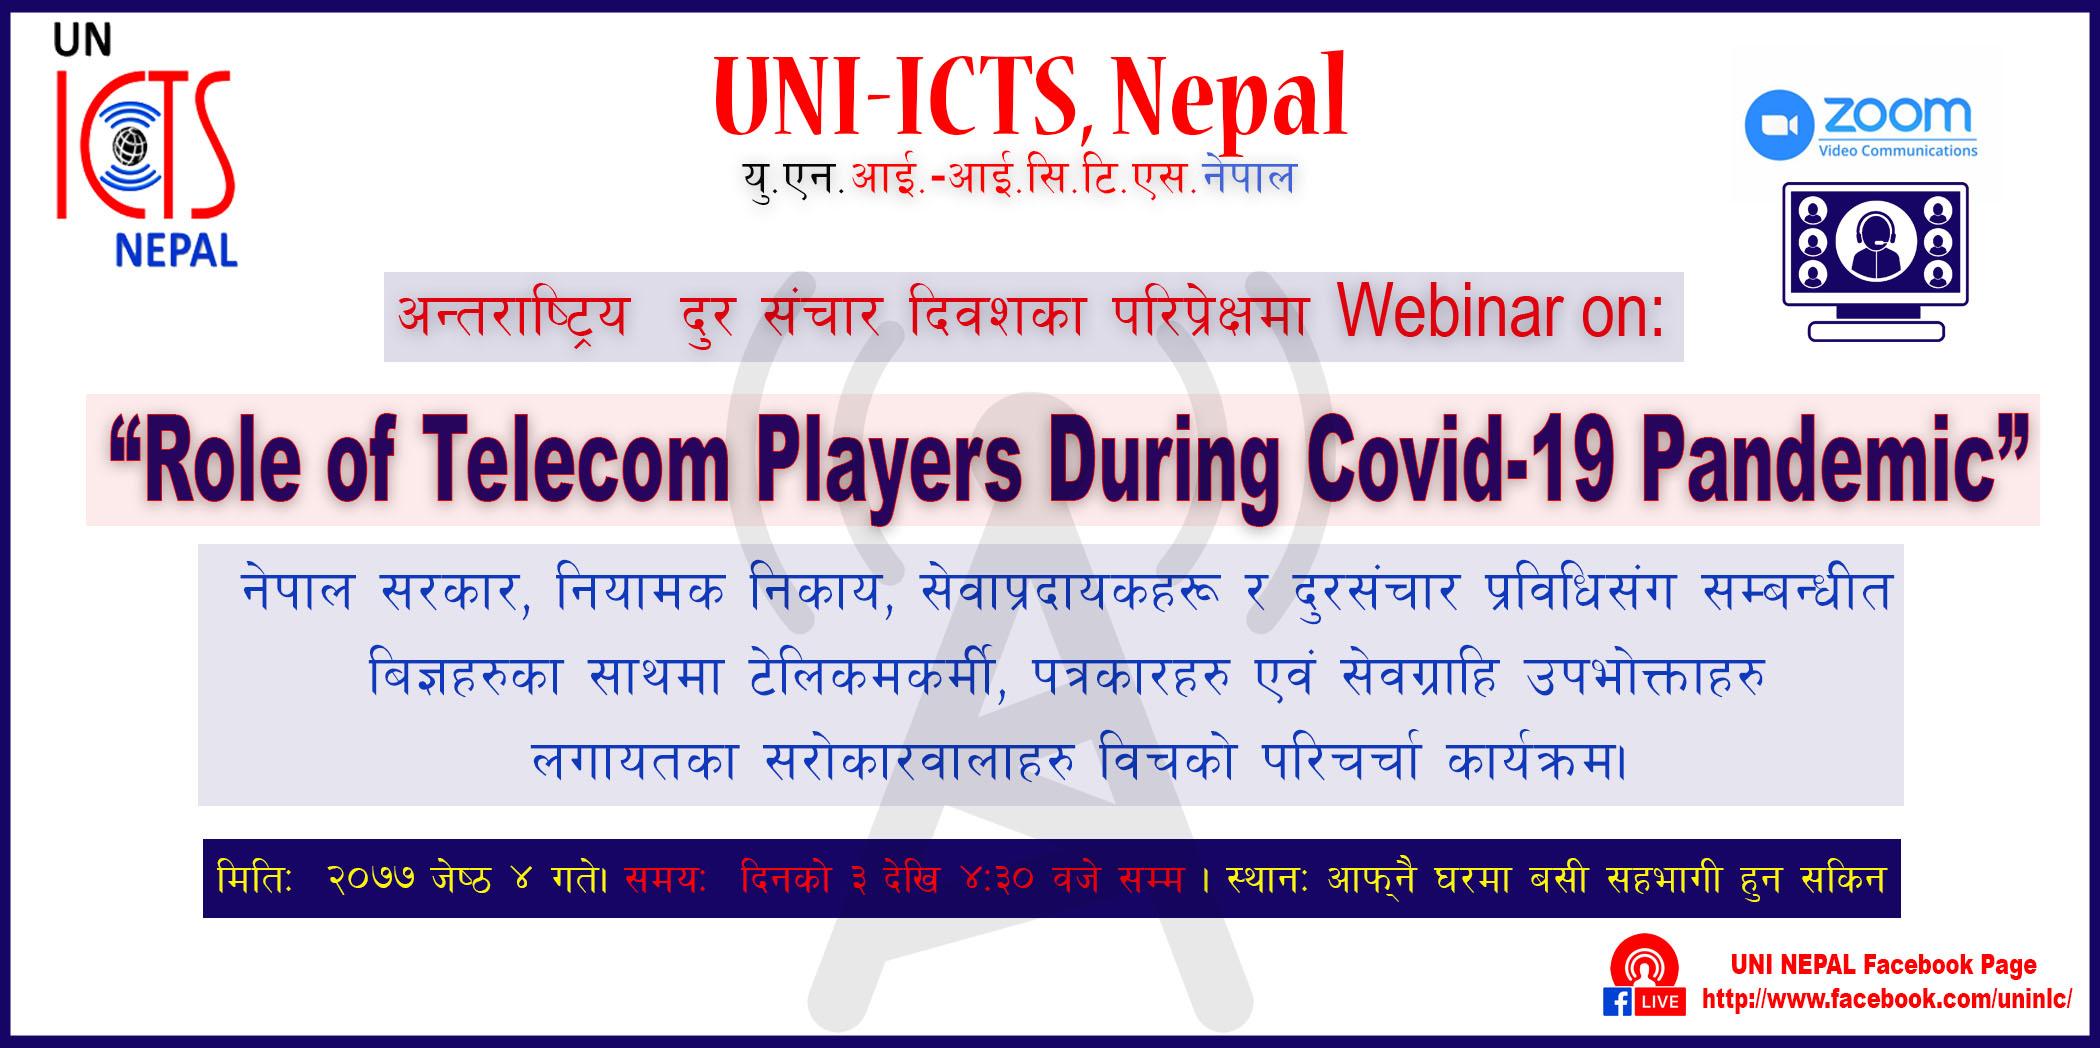 UNI ICTS Nepal Event